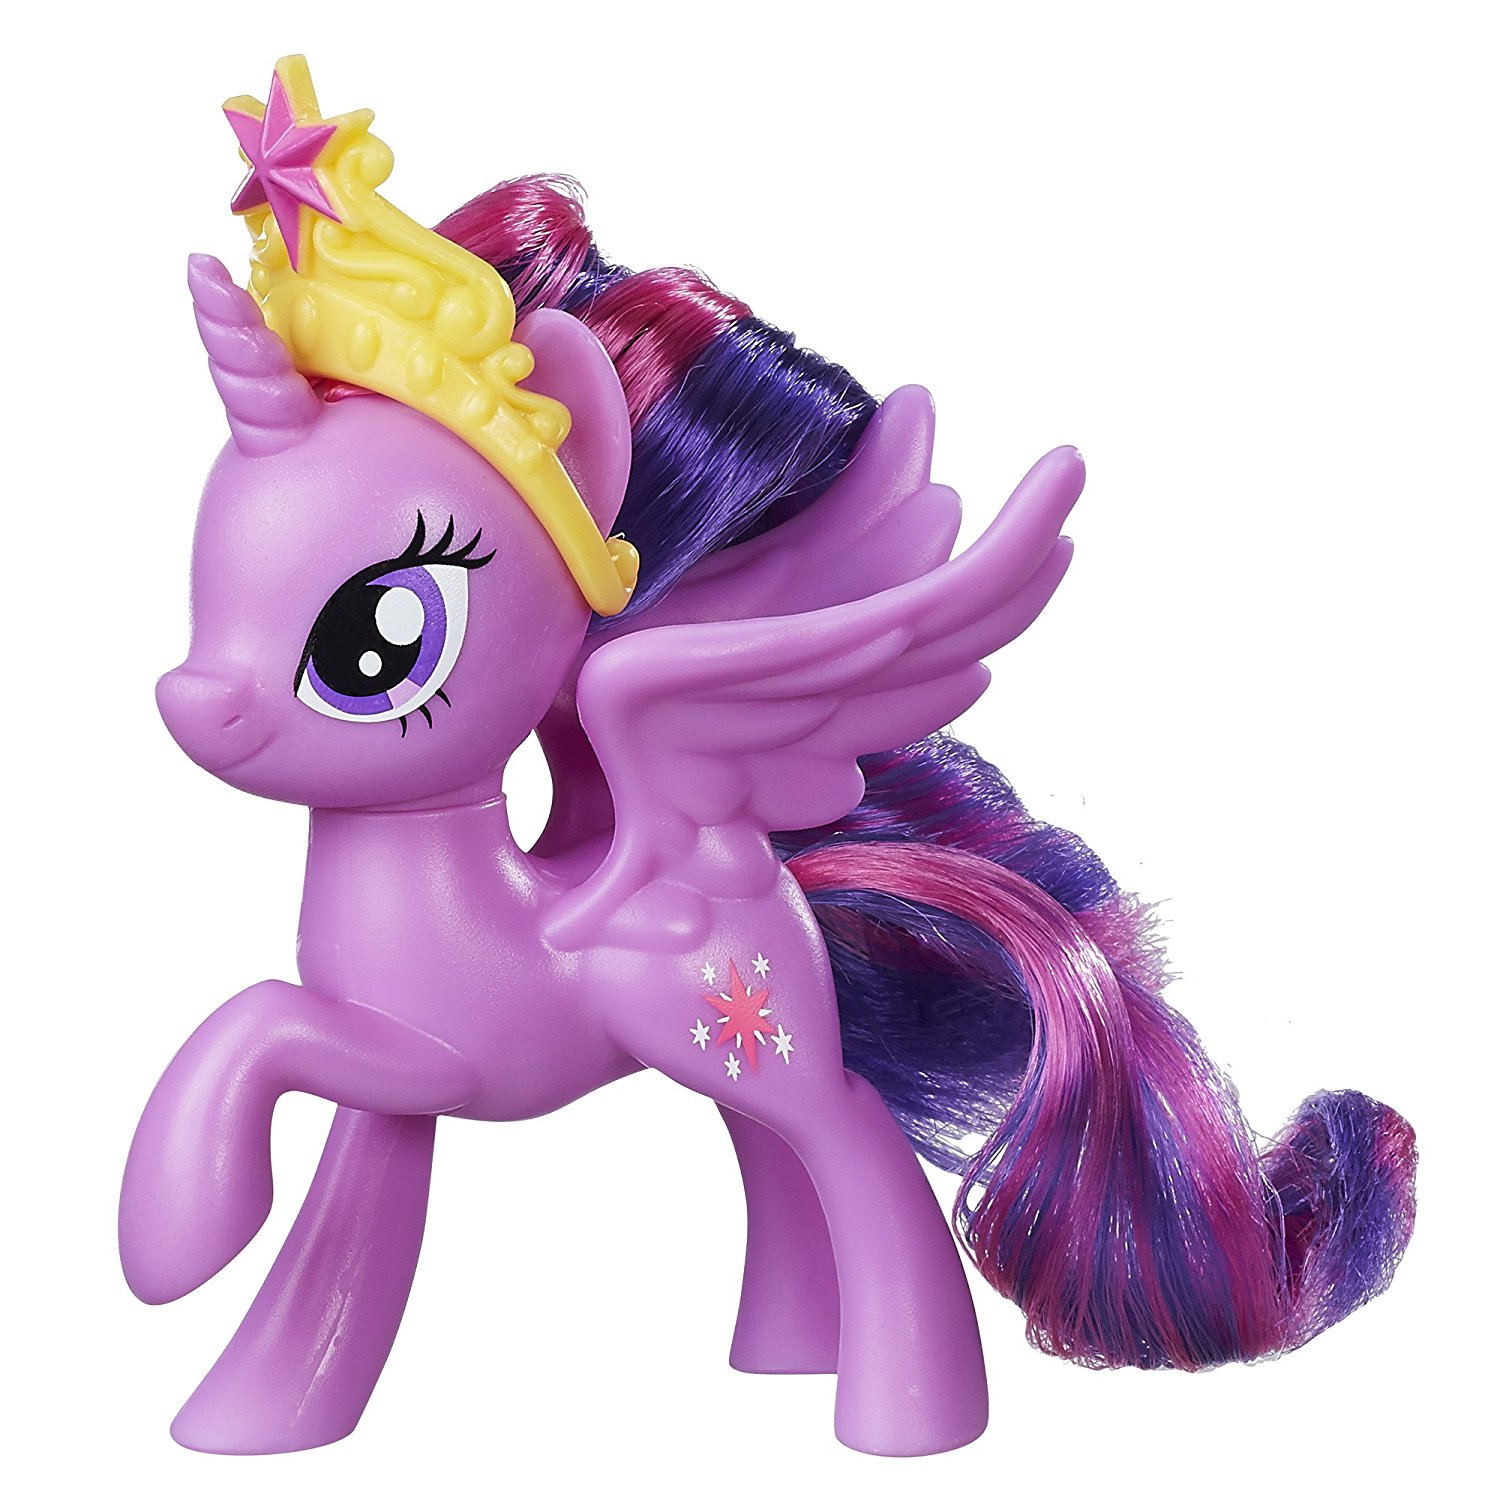 My little pony отзывы. Фигурка Hasbro Twilight Sparkle e0714. My little Pony игрушки Хасбро. Фигурка Hasbro Twilight Sparkle b6371. Принцесса Твайлайт Спаркл игрушка.